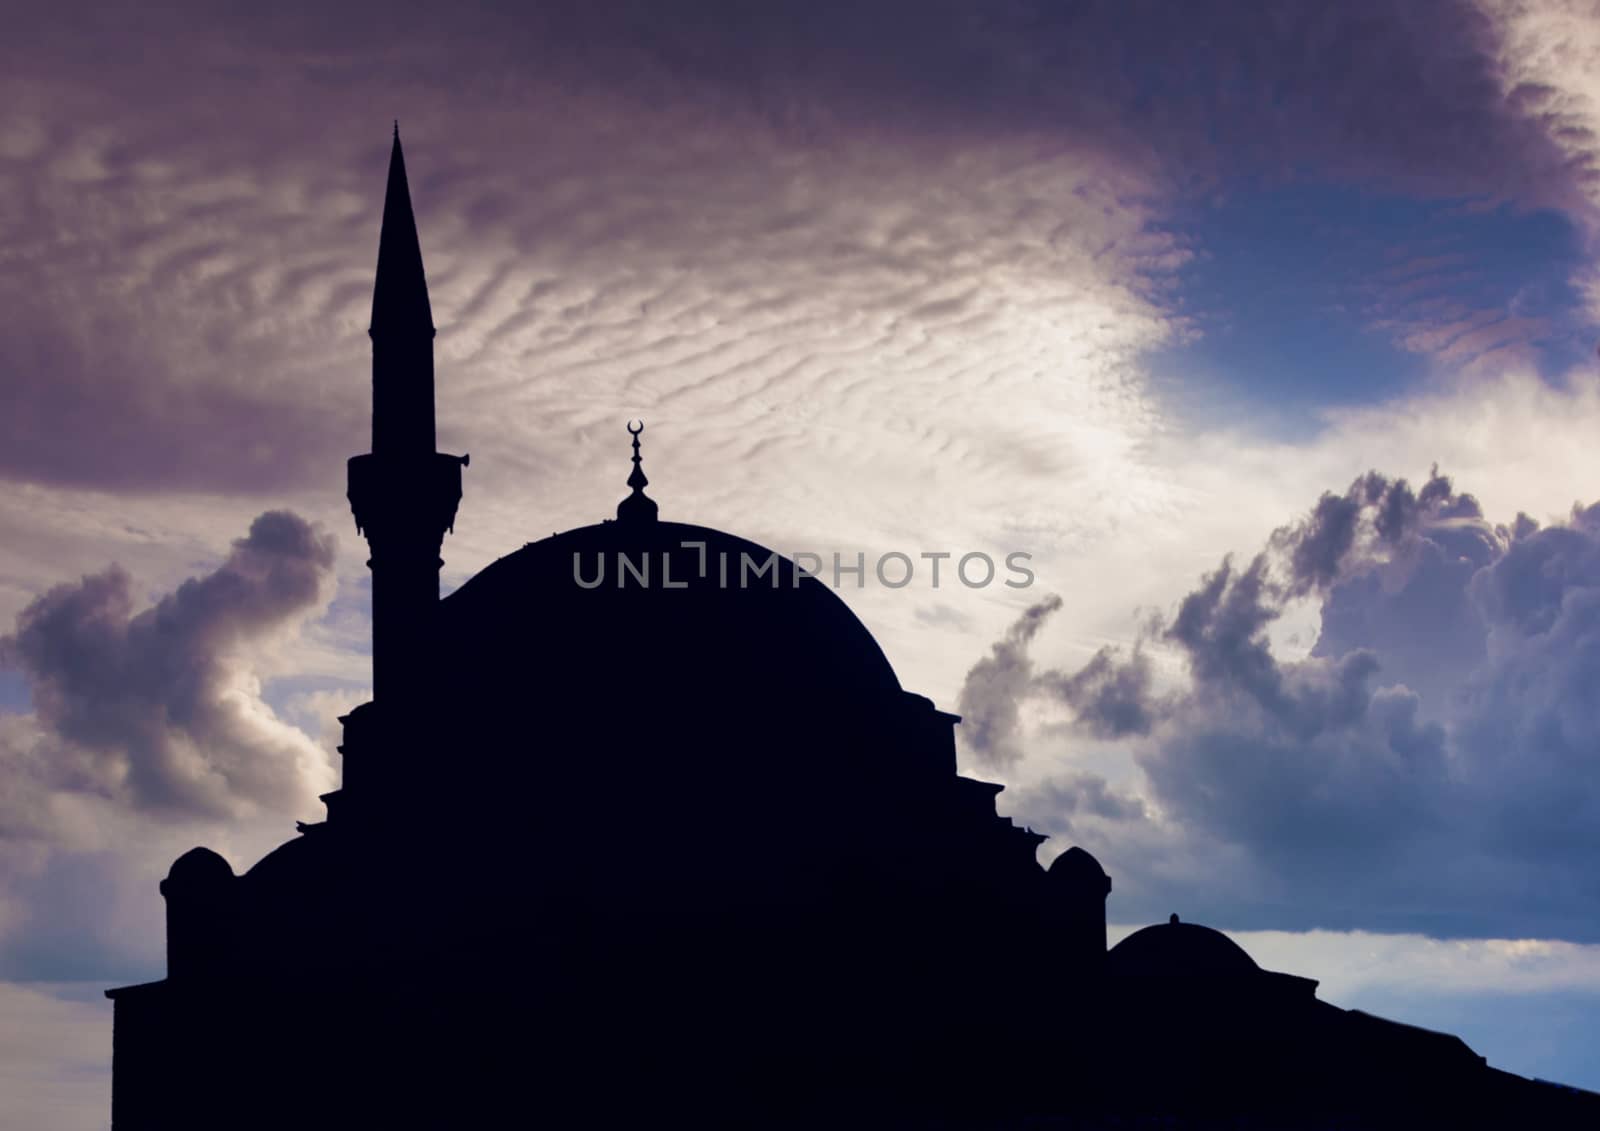 Blue mosque silhouette against a setting sun, Istanbul, Turkey